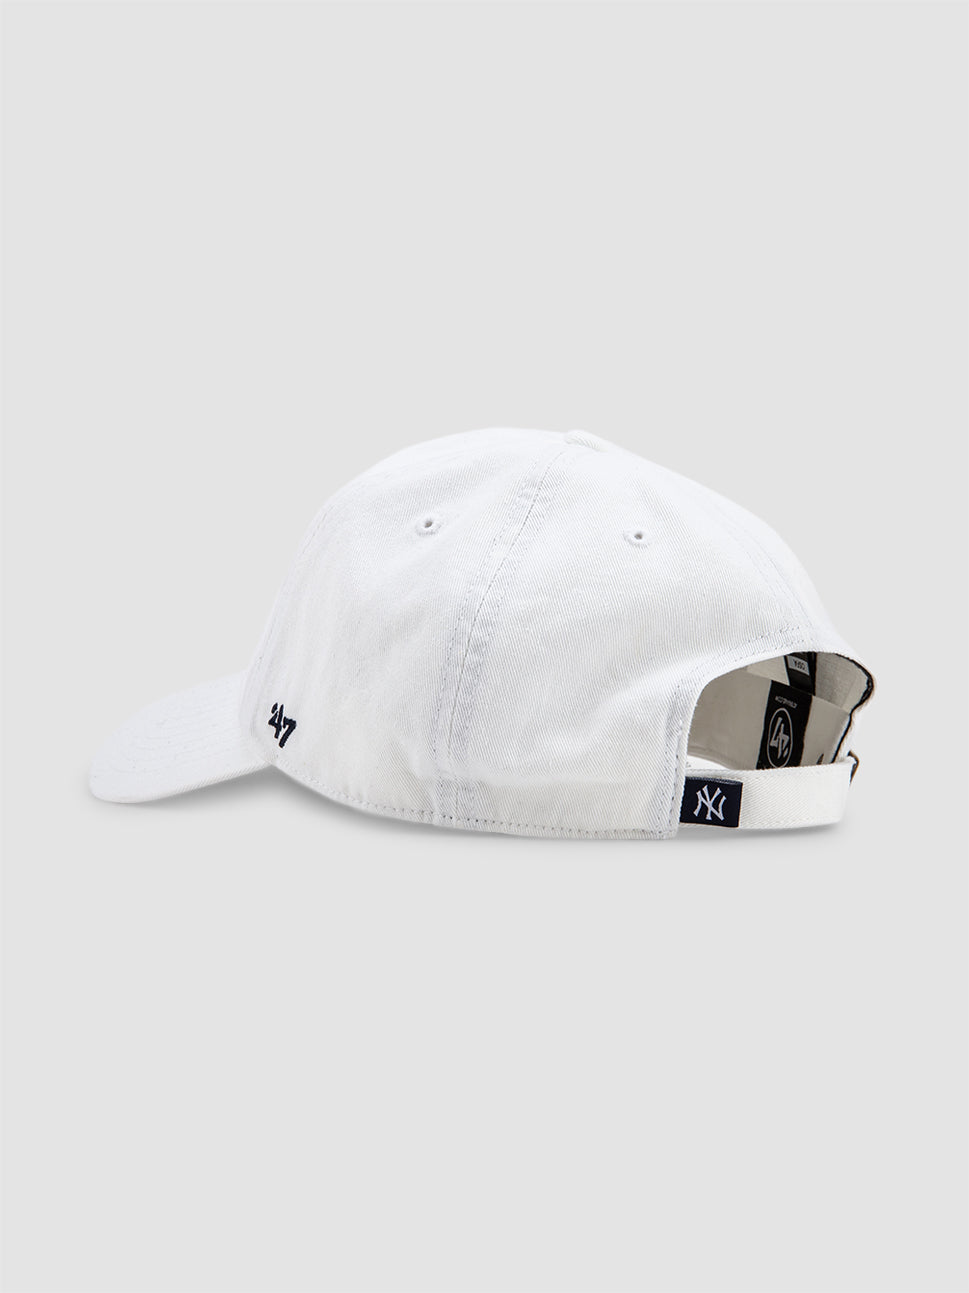 Shop latest trending White color '47 Caps & Headwear Online in UAE